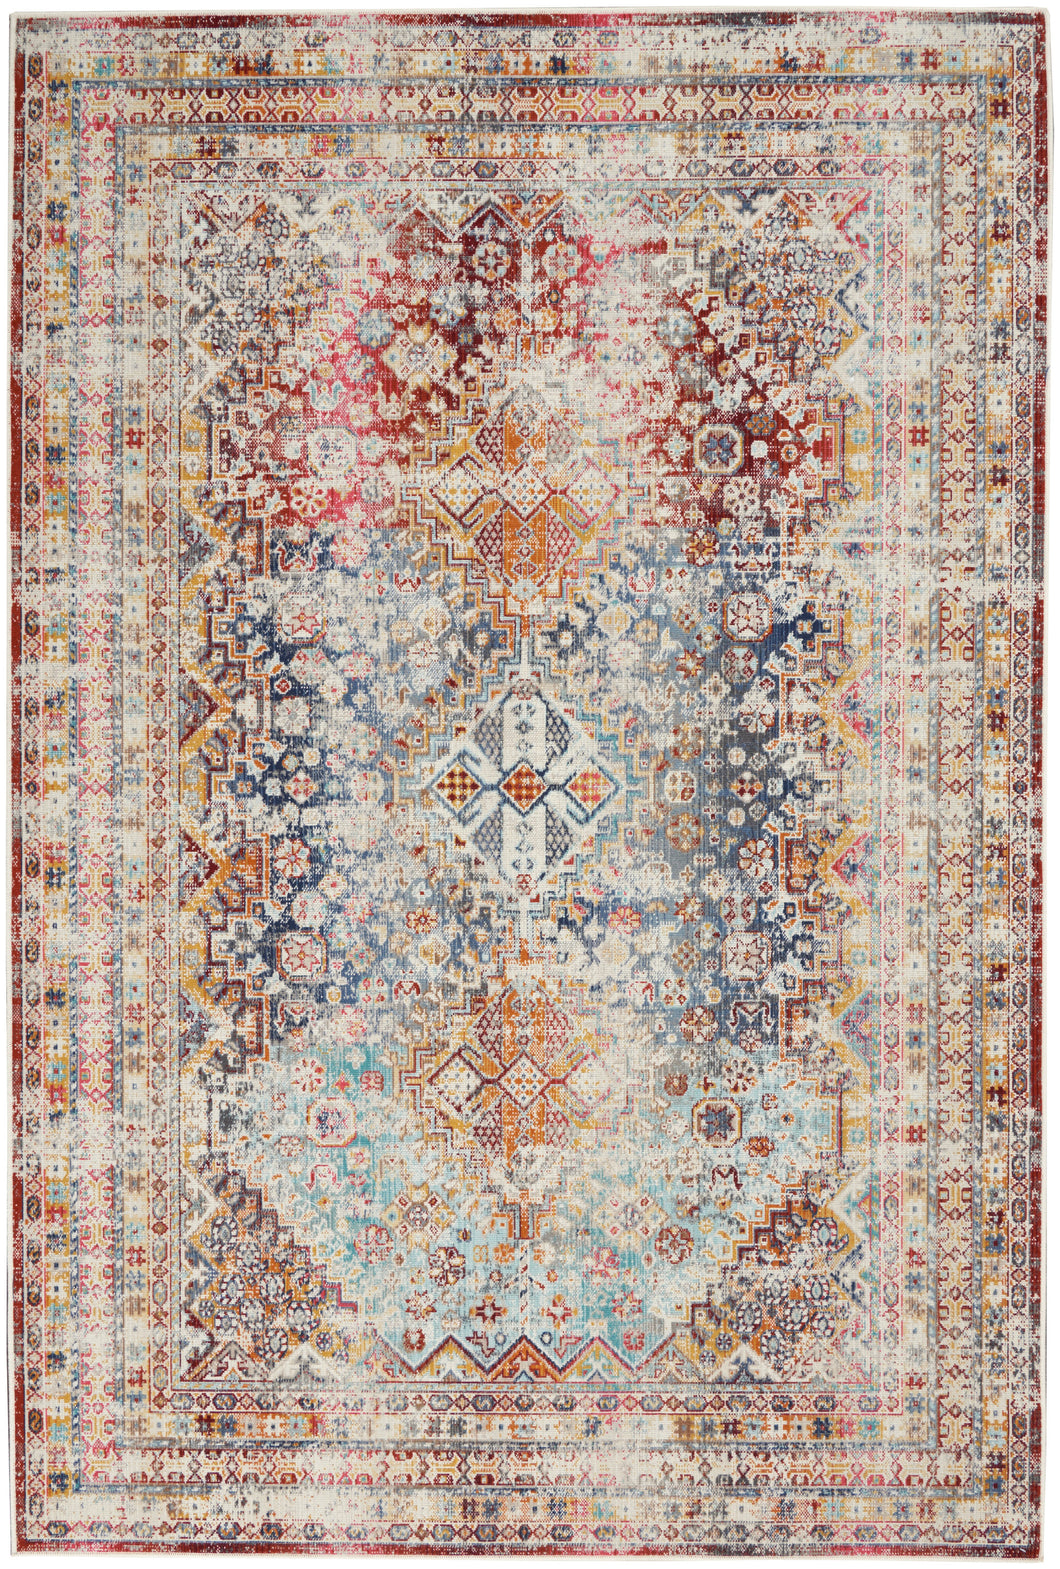 Nourison Vintage Kashan 9' x 12' Multicolor Area Rug VKA09 Multicolor